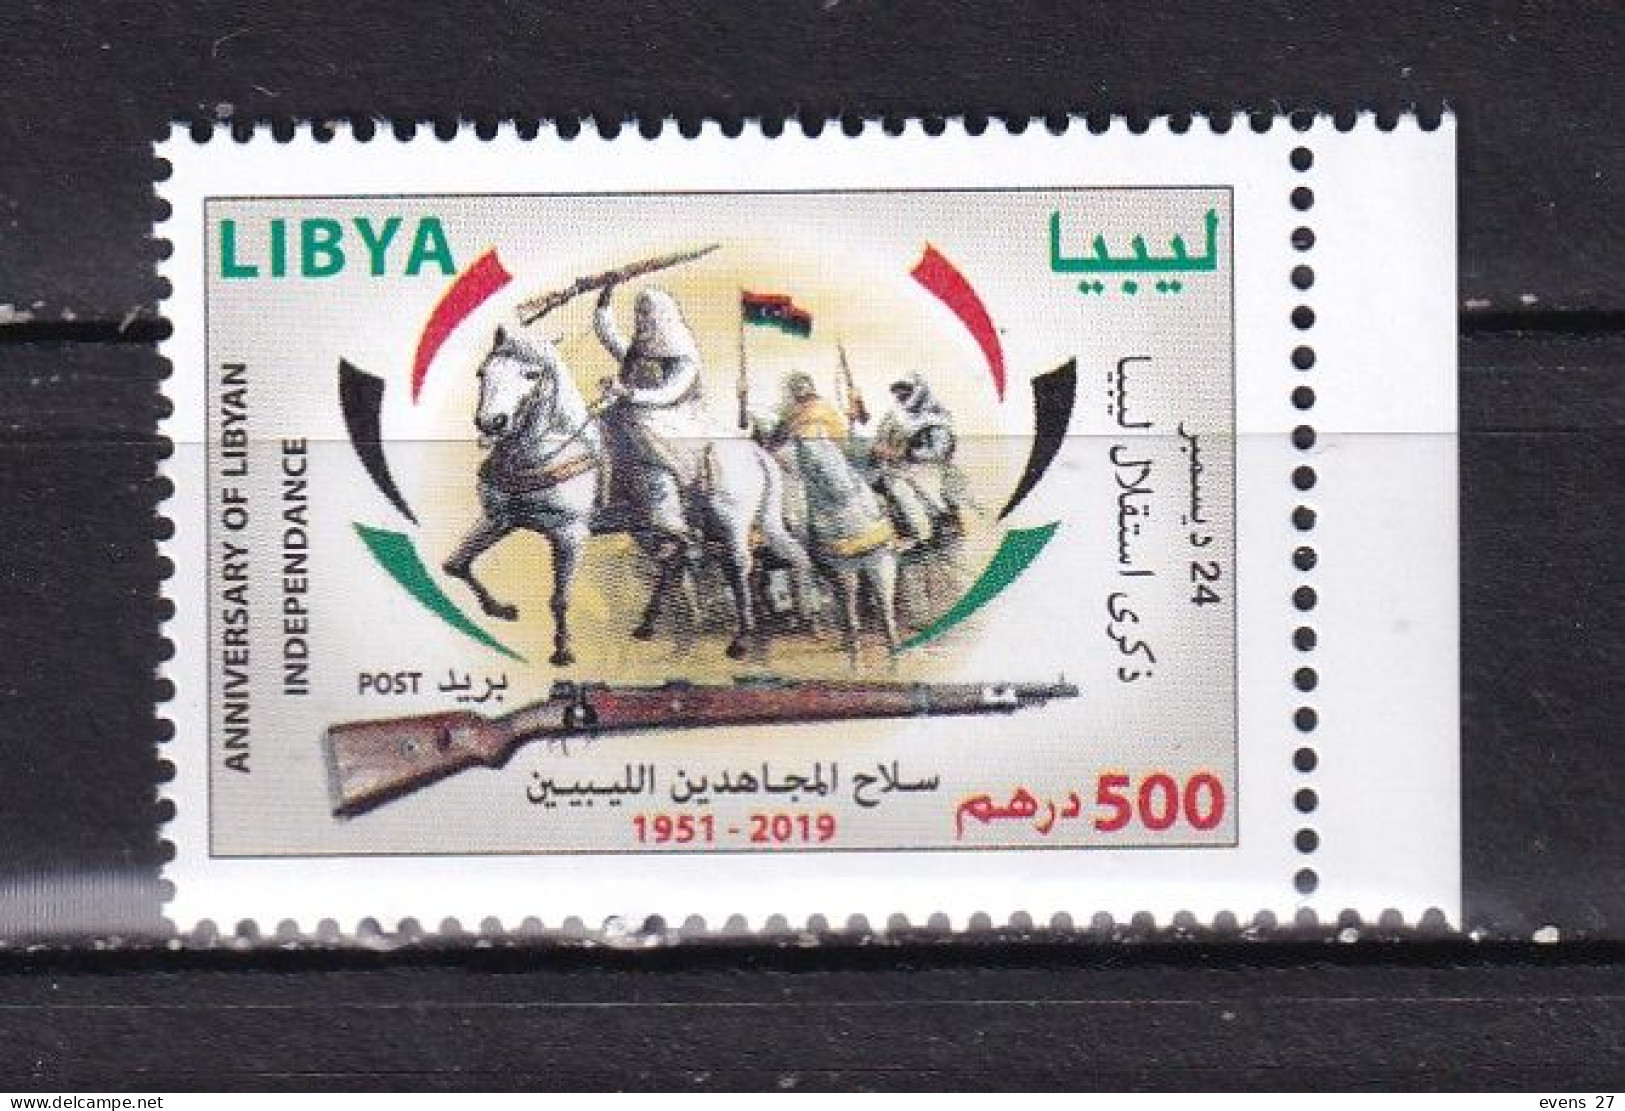 LIBYA-2019-LIBYAN INDEPENDENCE-MNH. - Unused Stamps